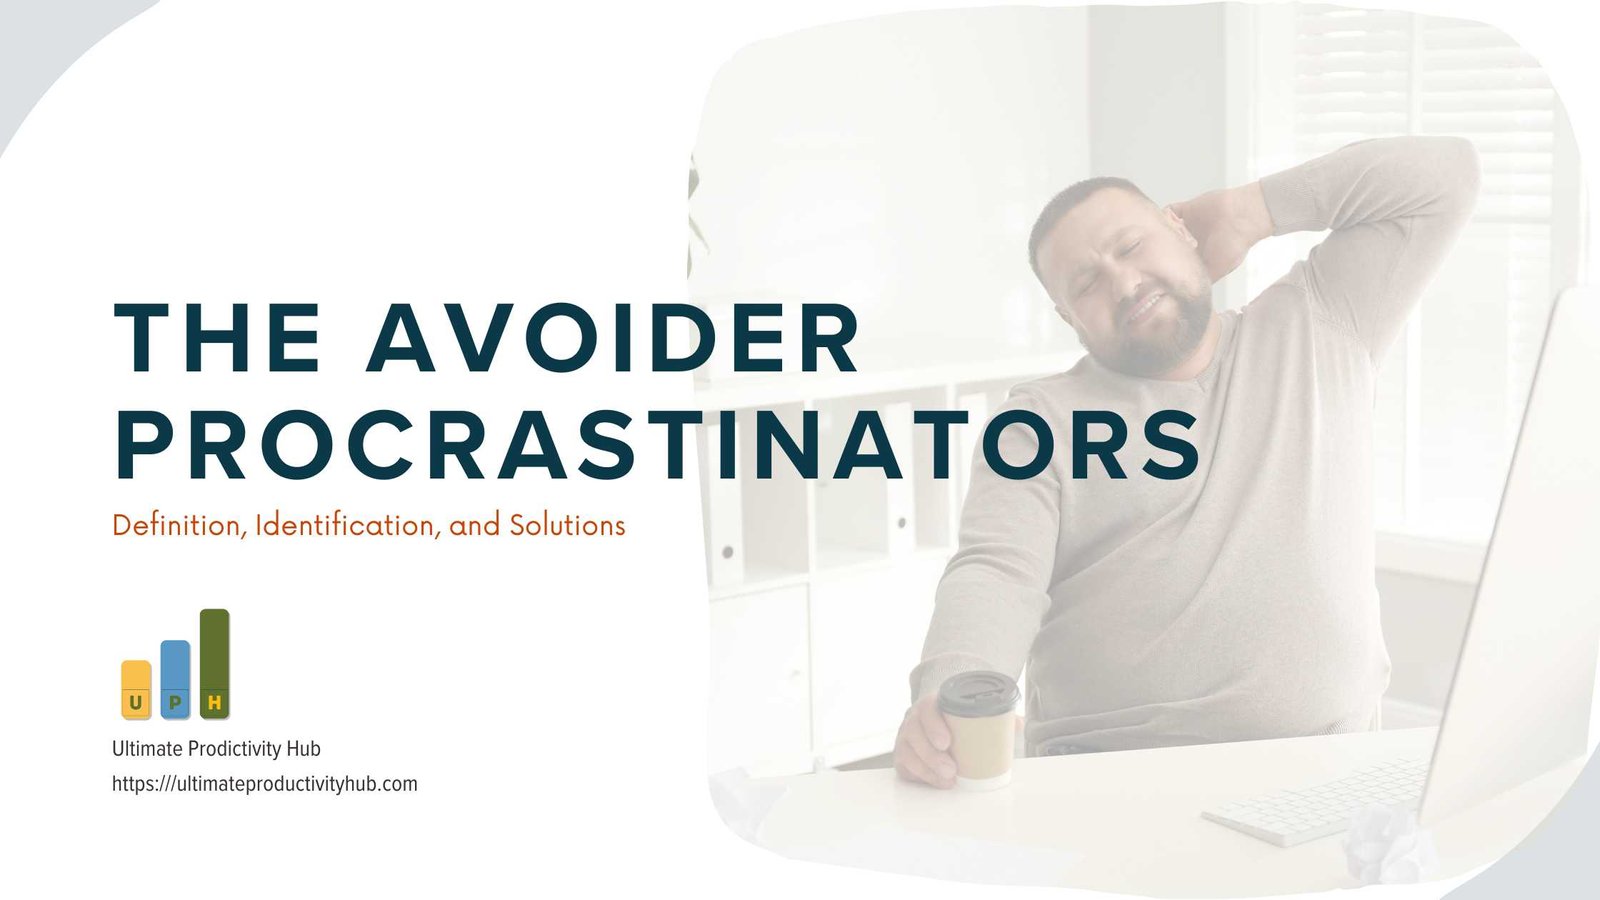 The Avoider Procrastinators